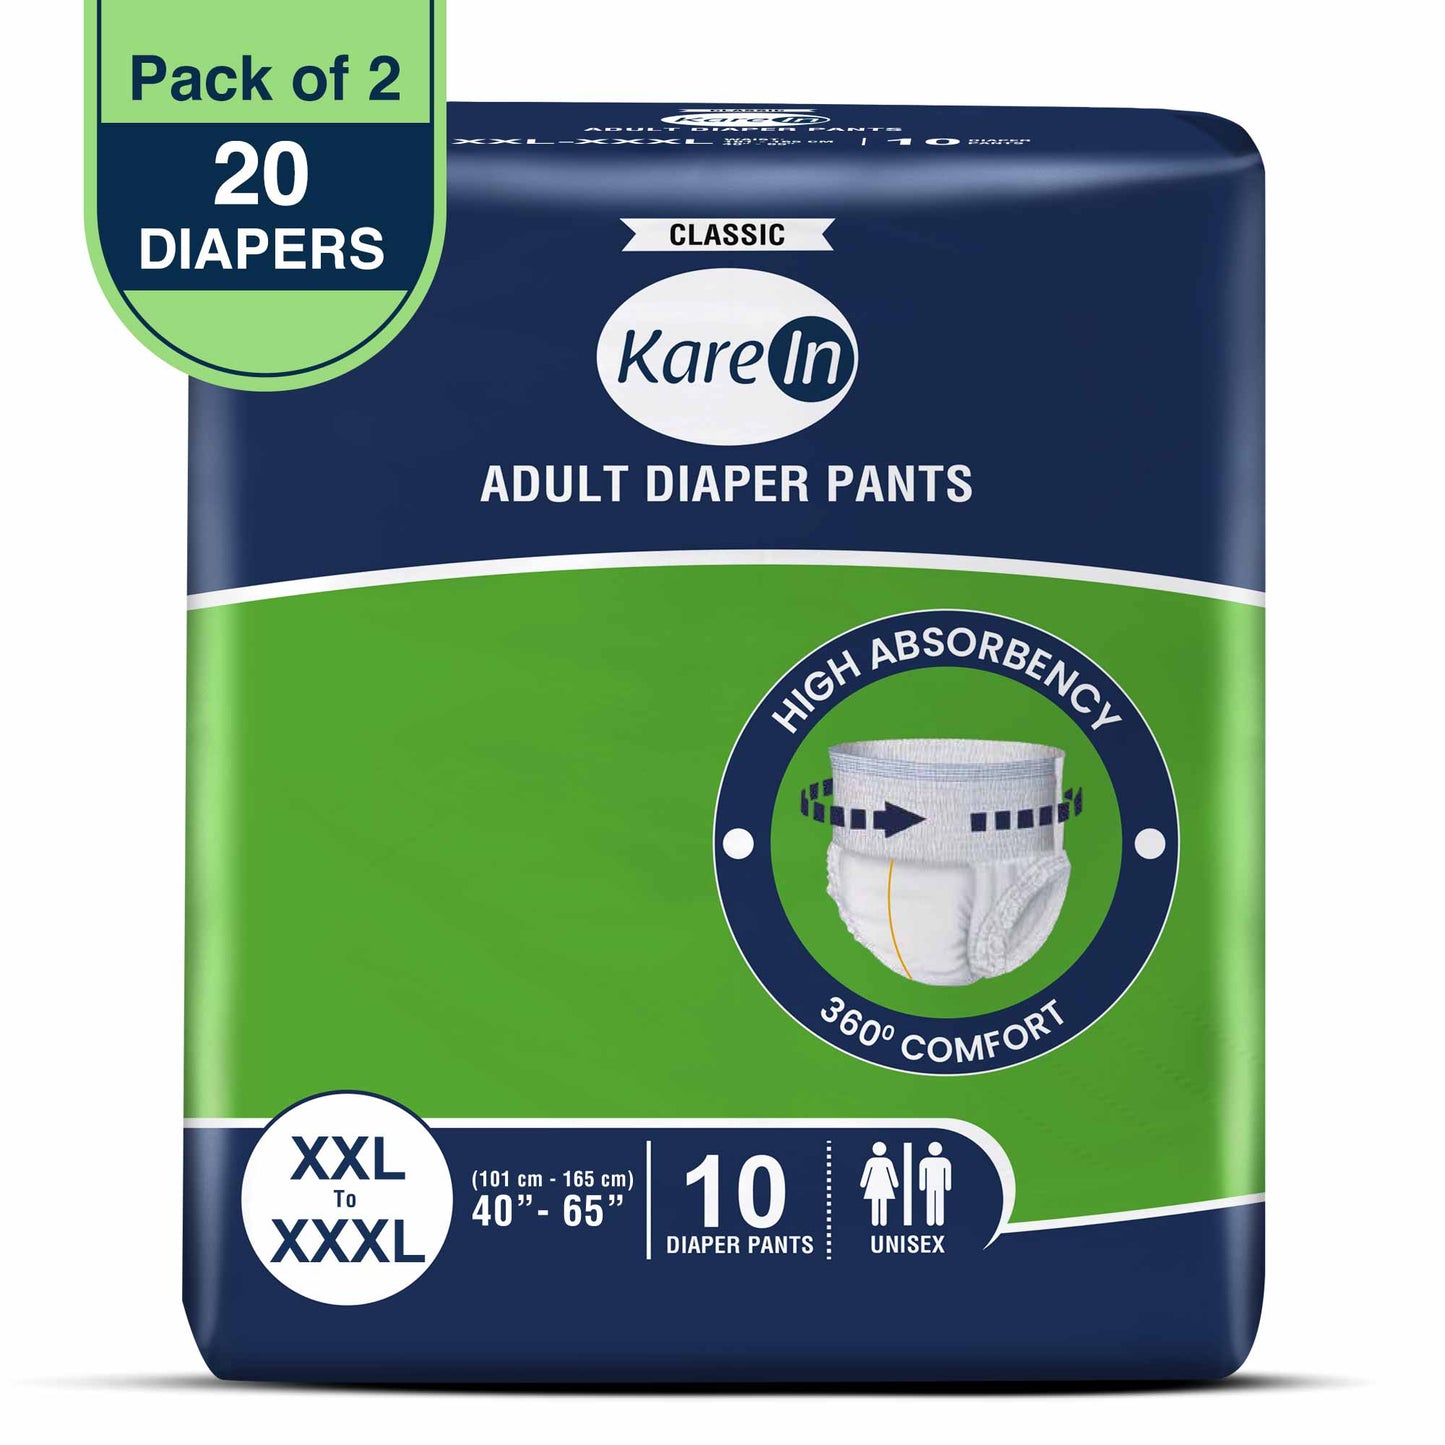 KareIn Classic Adult Diaper Pants, XXL-XXXL, 101 - 165 Cm (40"- 65"), Unisex, Leakproof, Elastic Waist, Wetness Indicator,20 Count